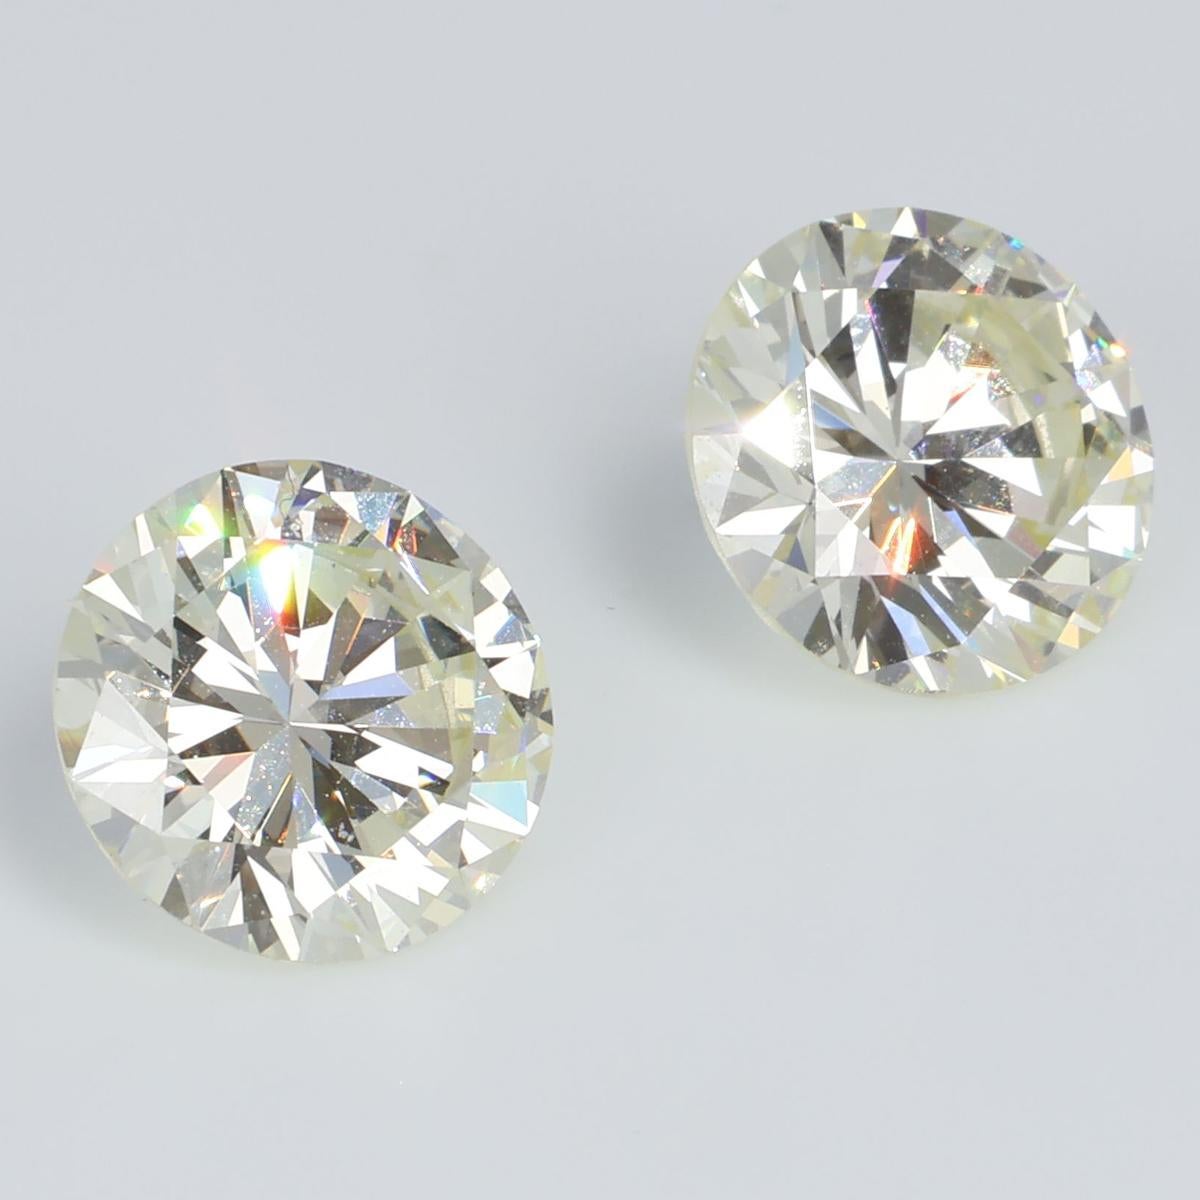 Brilliant Cut IGI 2.12 ct + 2.12 ct Diamond Duet VS1 - Very Light Yellow 4.24 ct Twin Pair For Sale